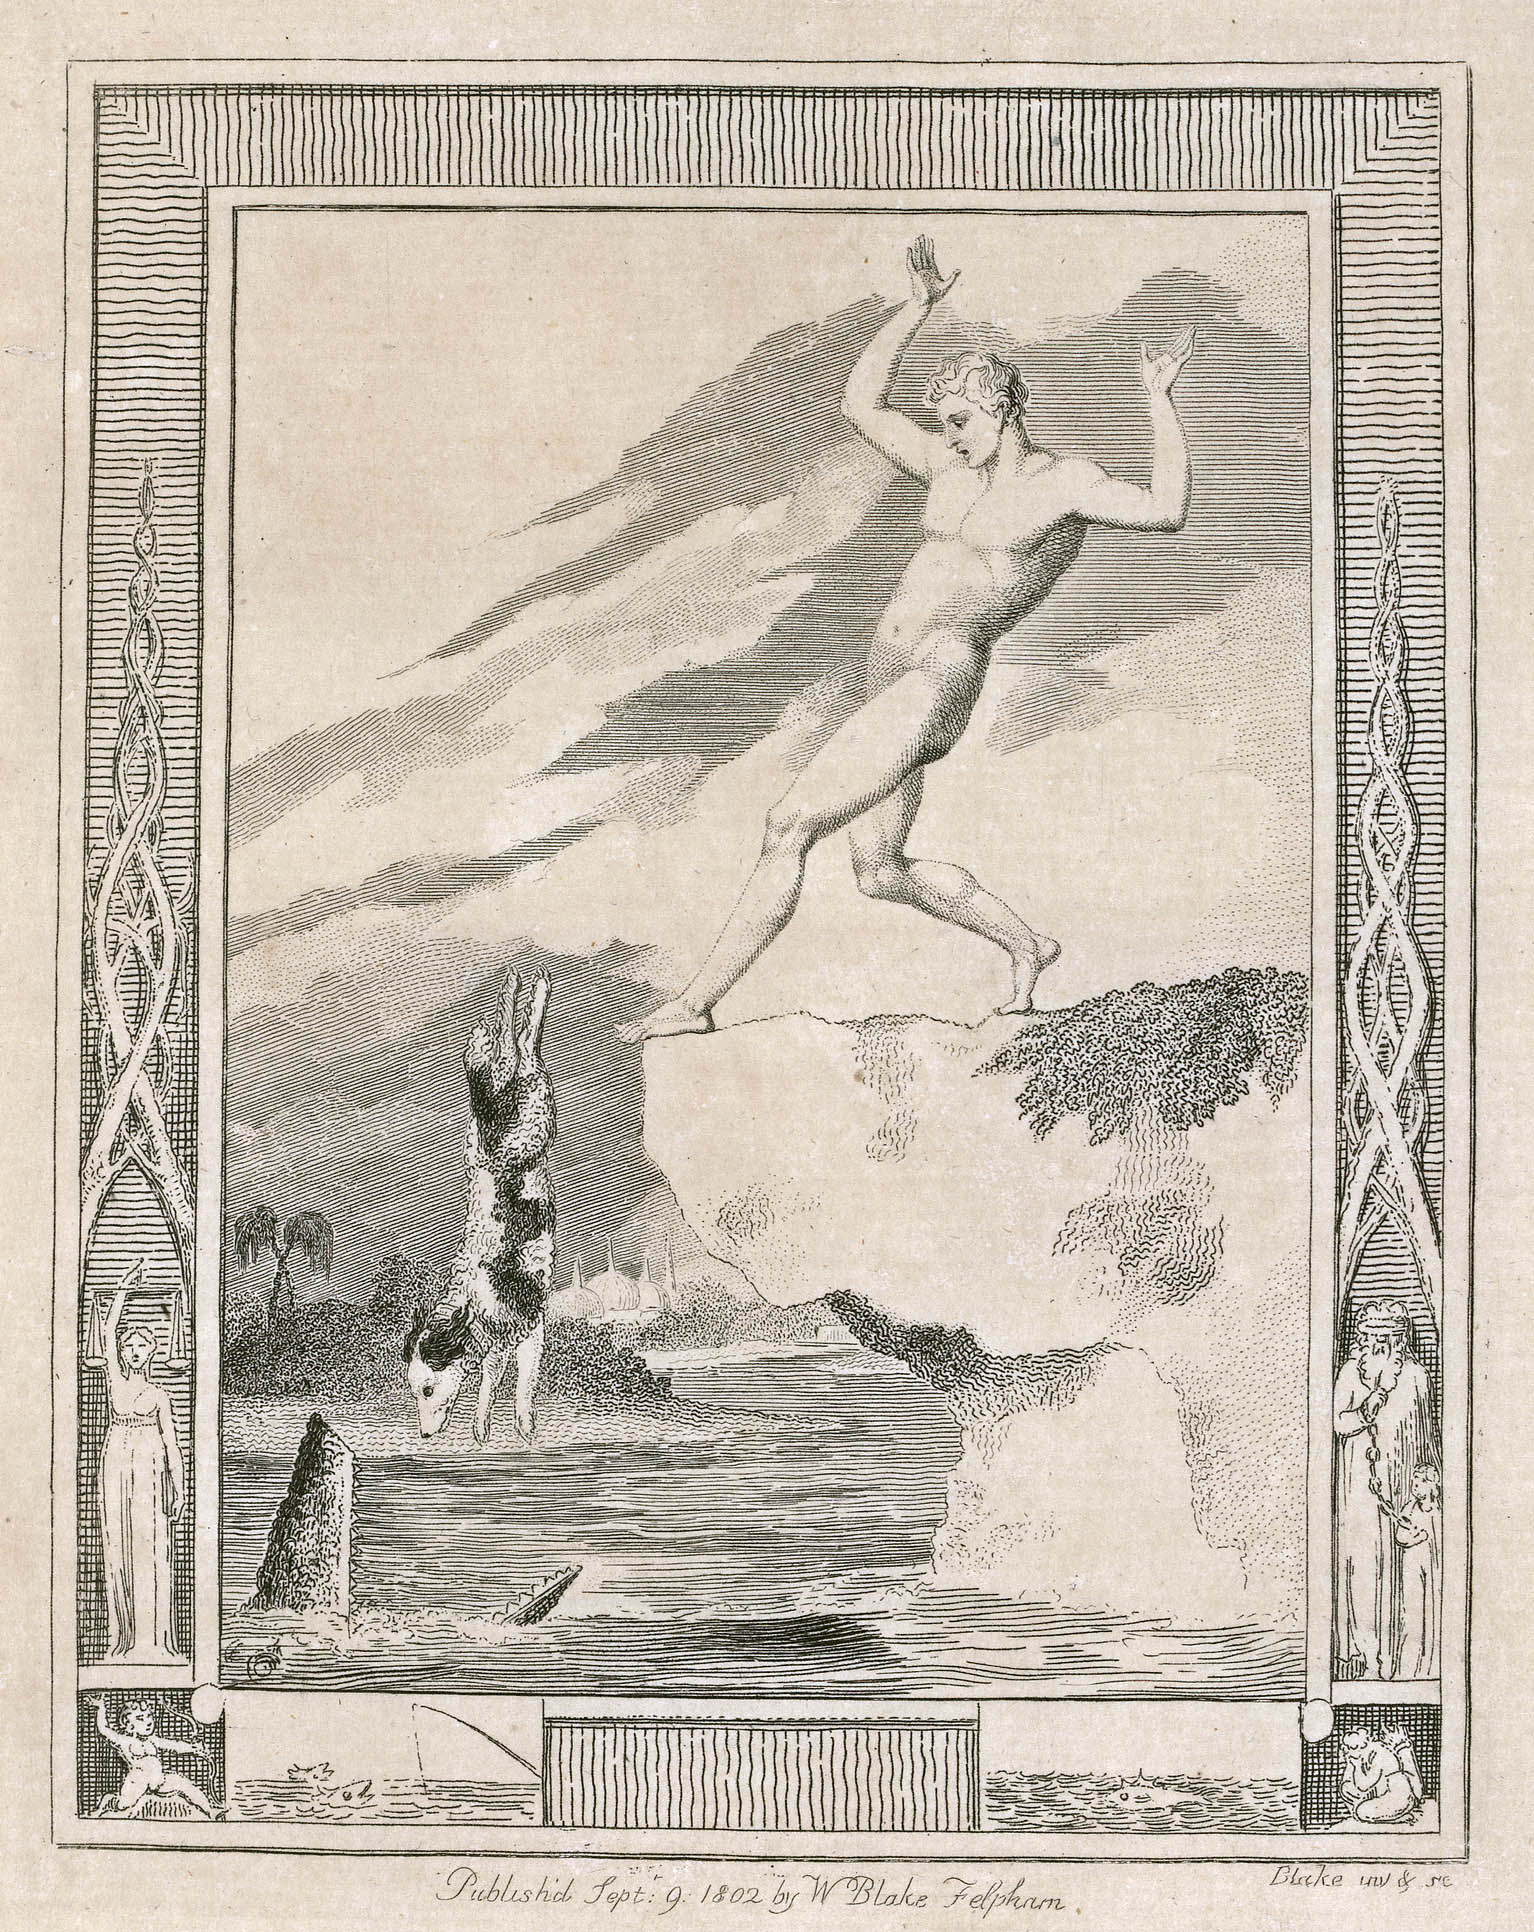 Blake inv & sc
	Publish’d Septr: 9: 1802 by W Blake Felpham